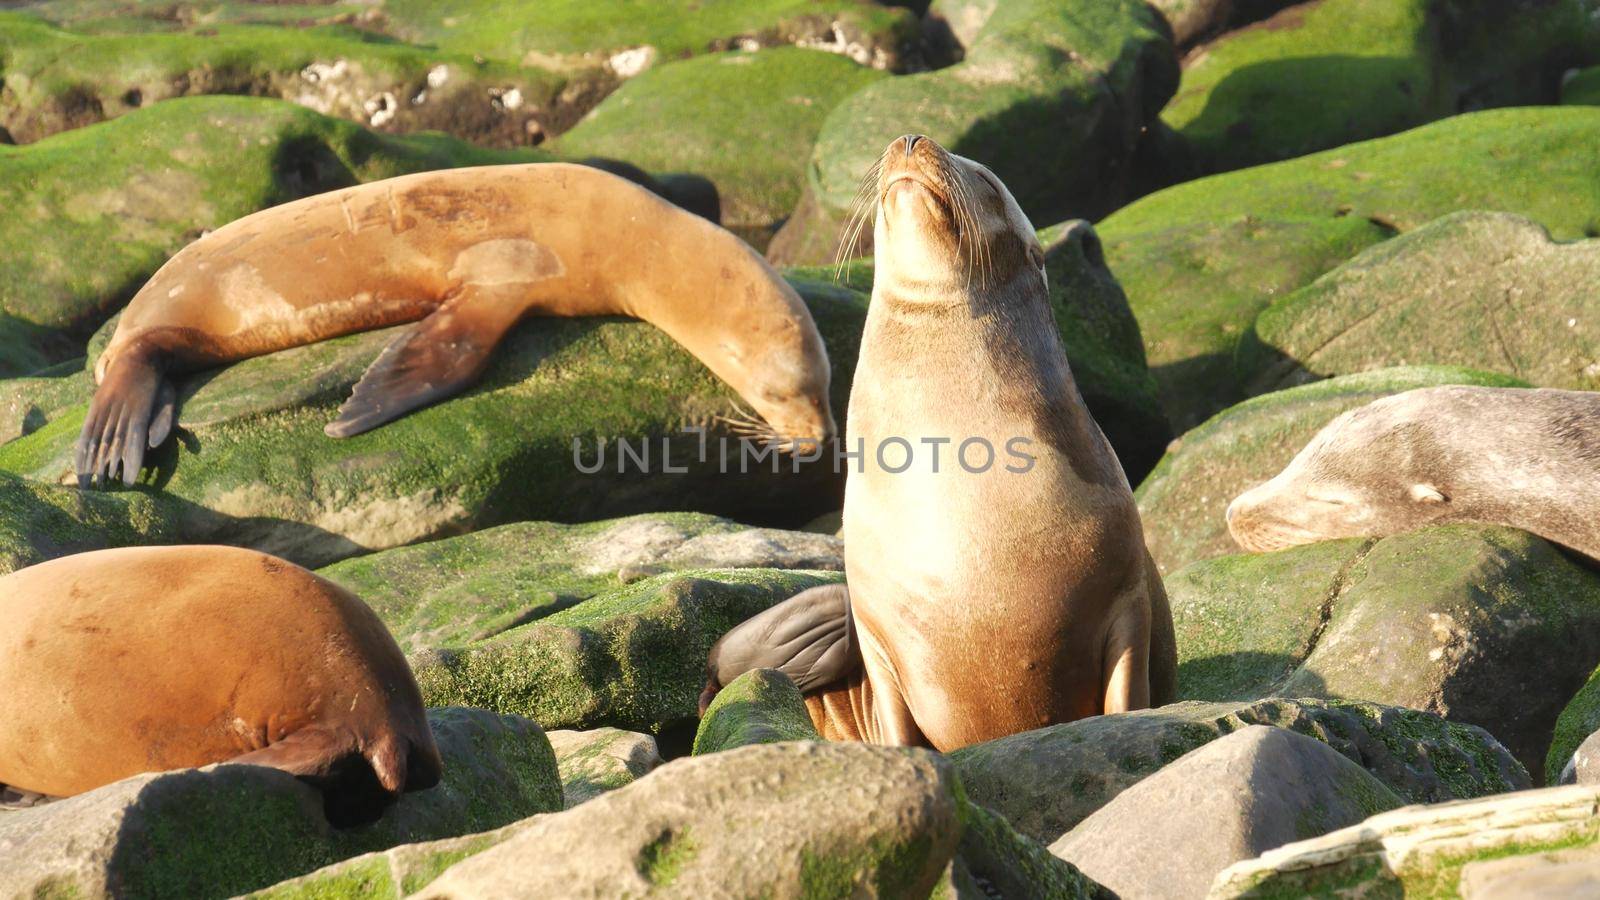 Sea lion on the rock in La Jolla. Wild eared seal resting near pacific ocean on stone. Funny wildlife animal lazing on the beach. Protected marine mammal in natural habitat, San Diego, California USA by DogoraSun